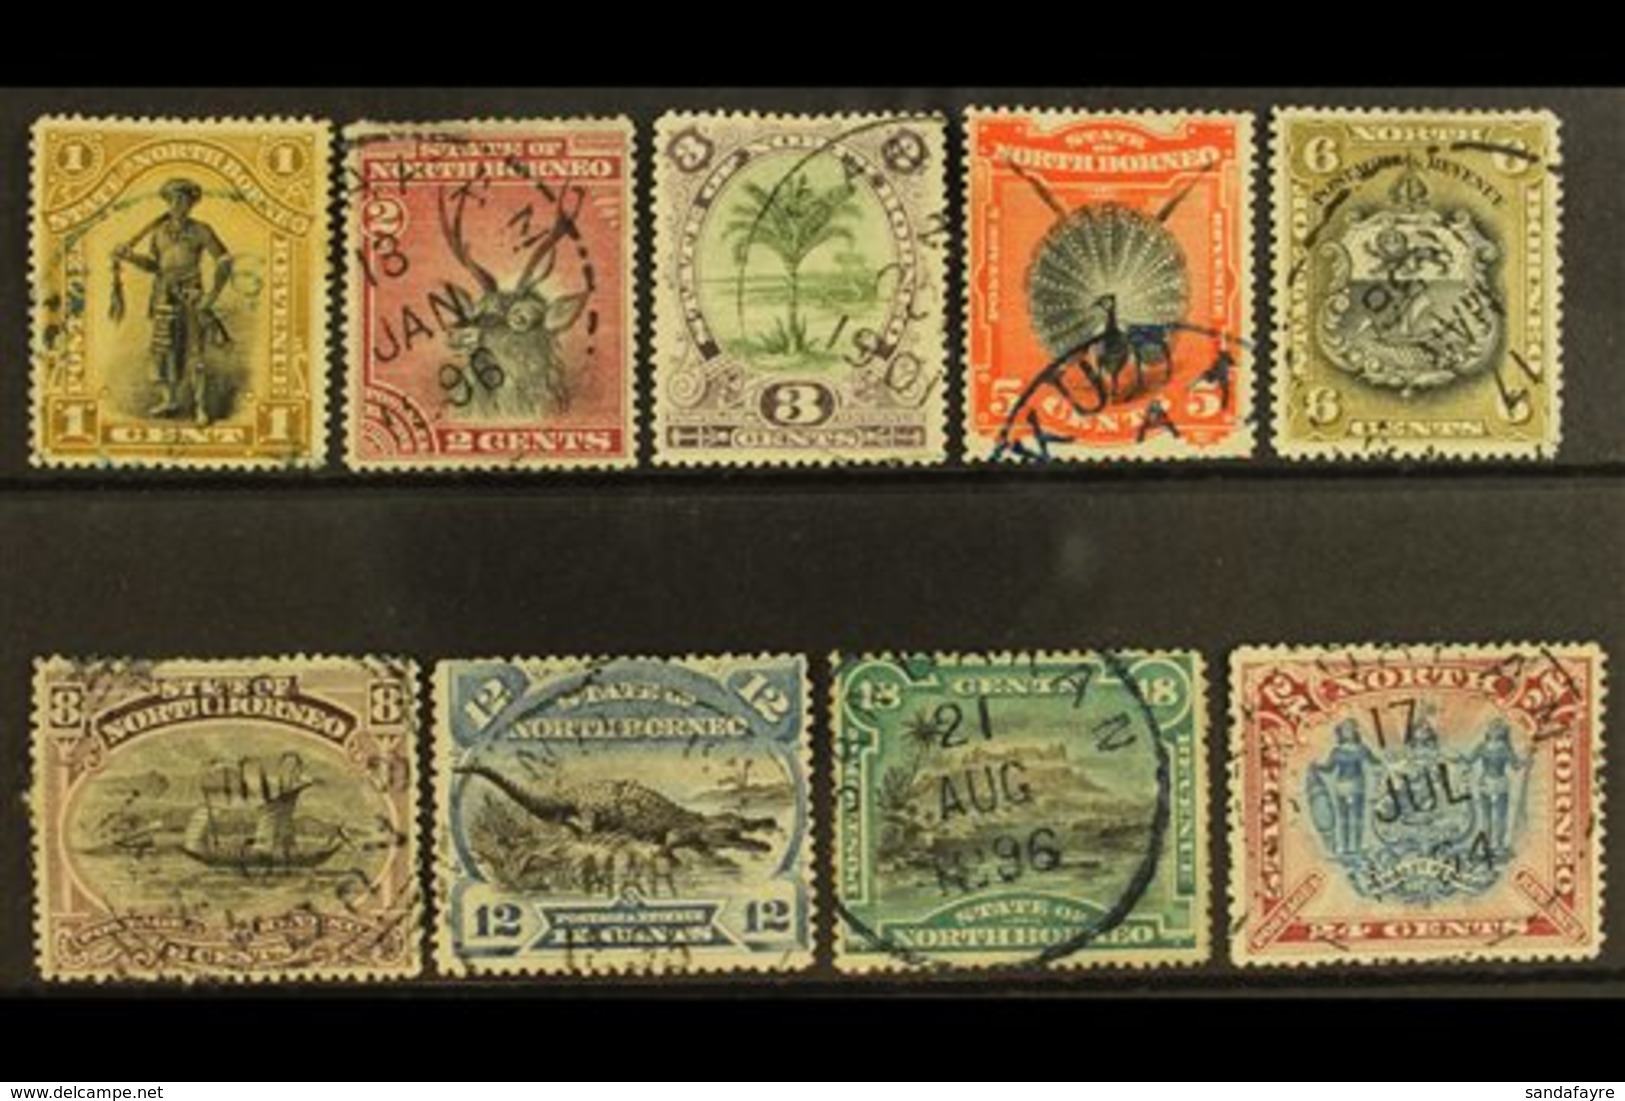 1894 Pictorials Set Complete, SG 66/79, Fine Used (9 Stamps) For More Images, Please Visit Http://www.sandafayre.com/ite - Borneo Septentrional (...-1963)